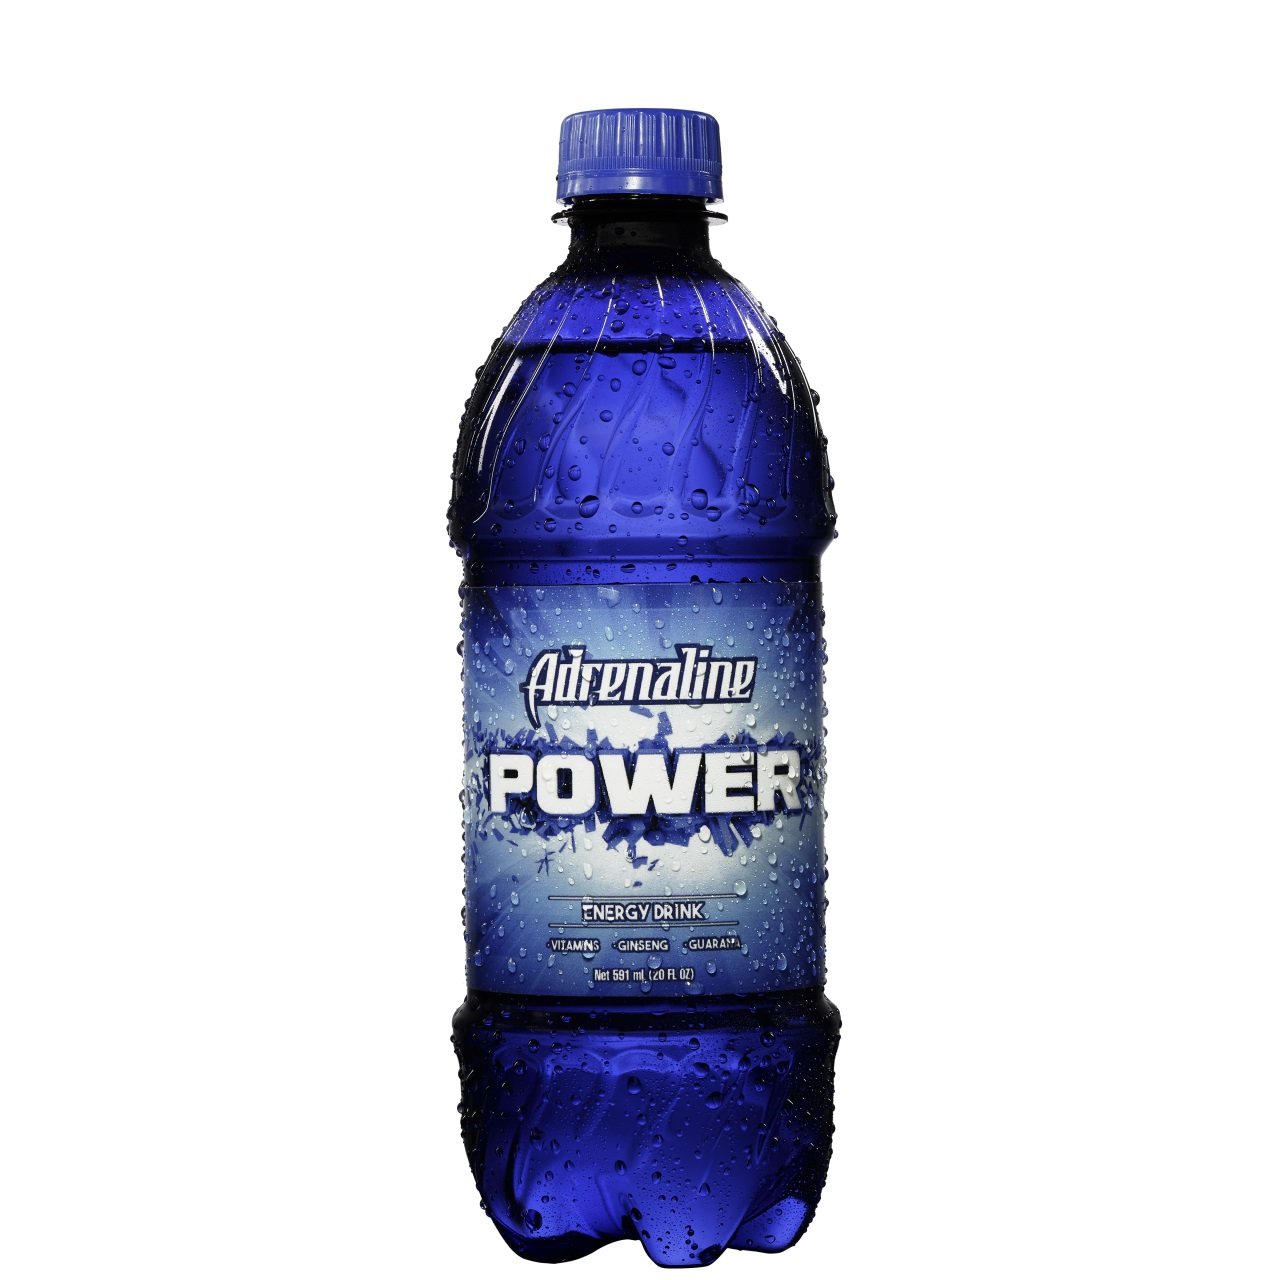 Power drink